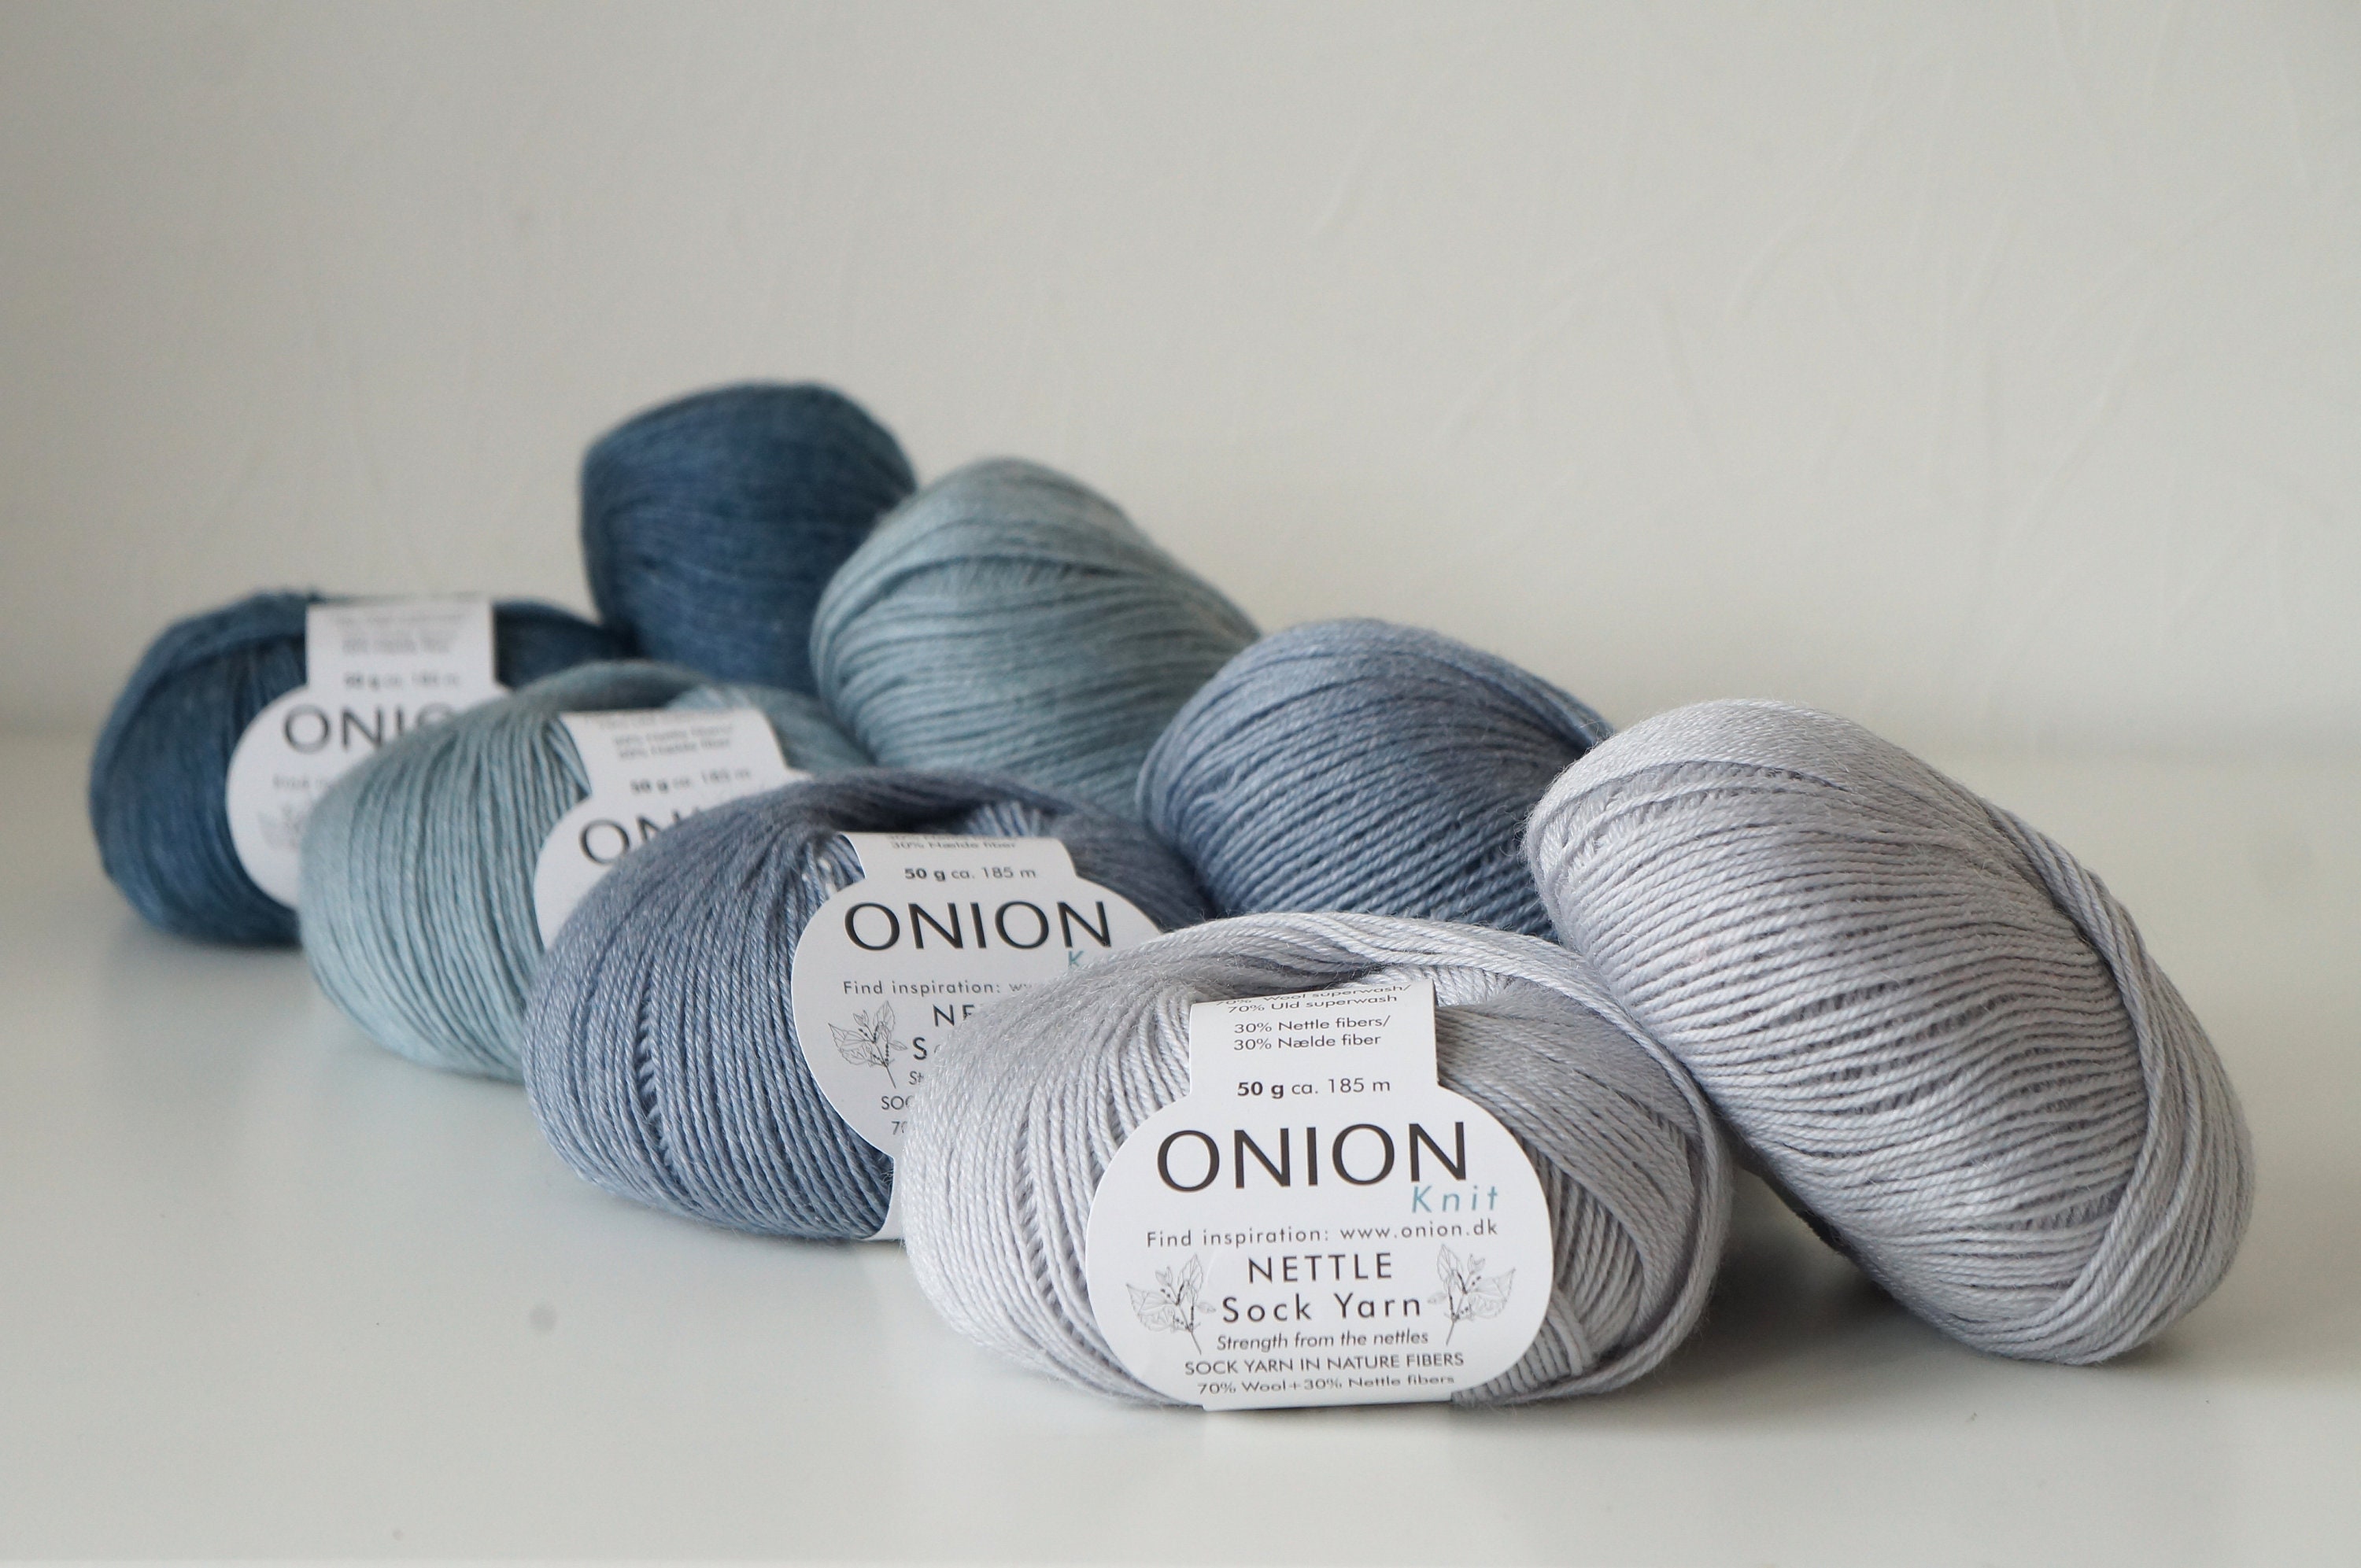 Knitting Yarn NETTLE Yarn From Onion Knit 100% Natural Etsy